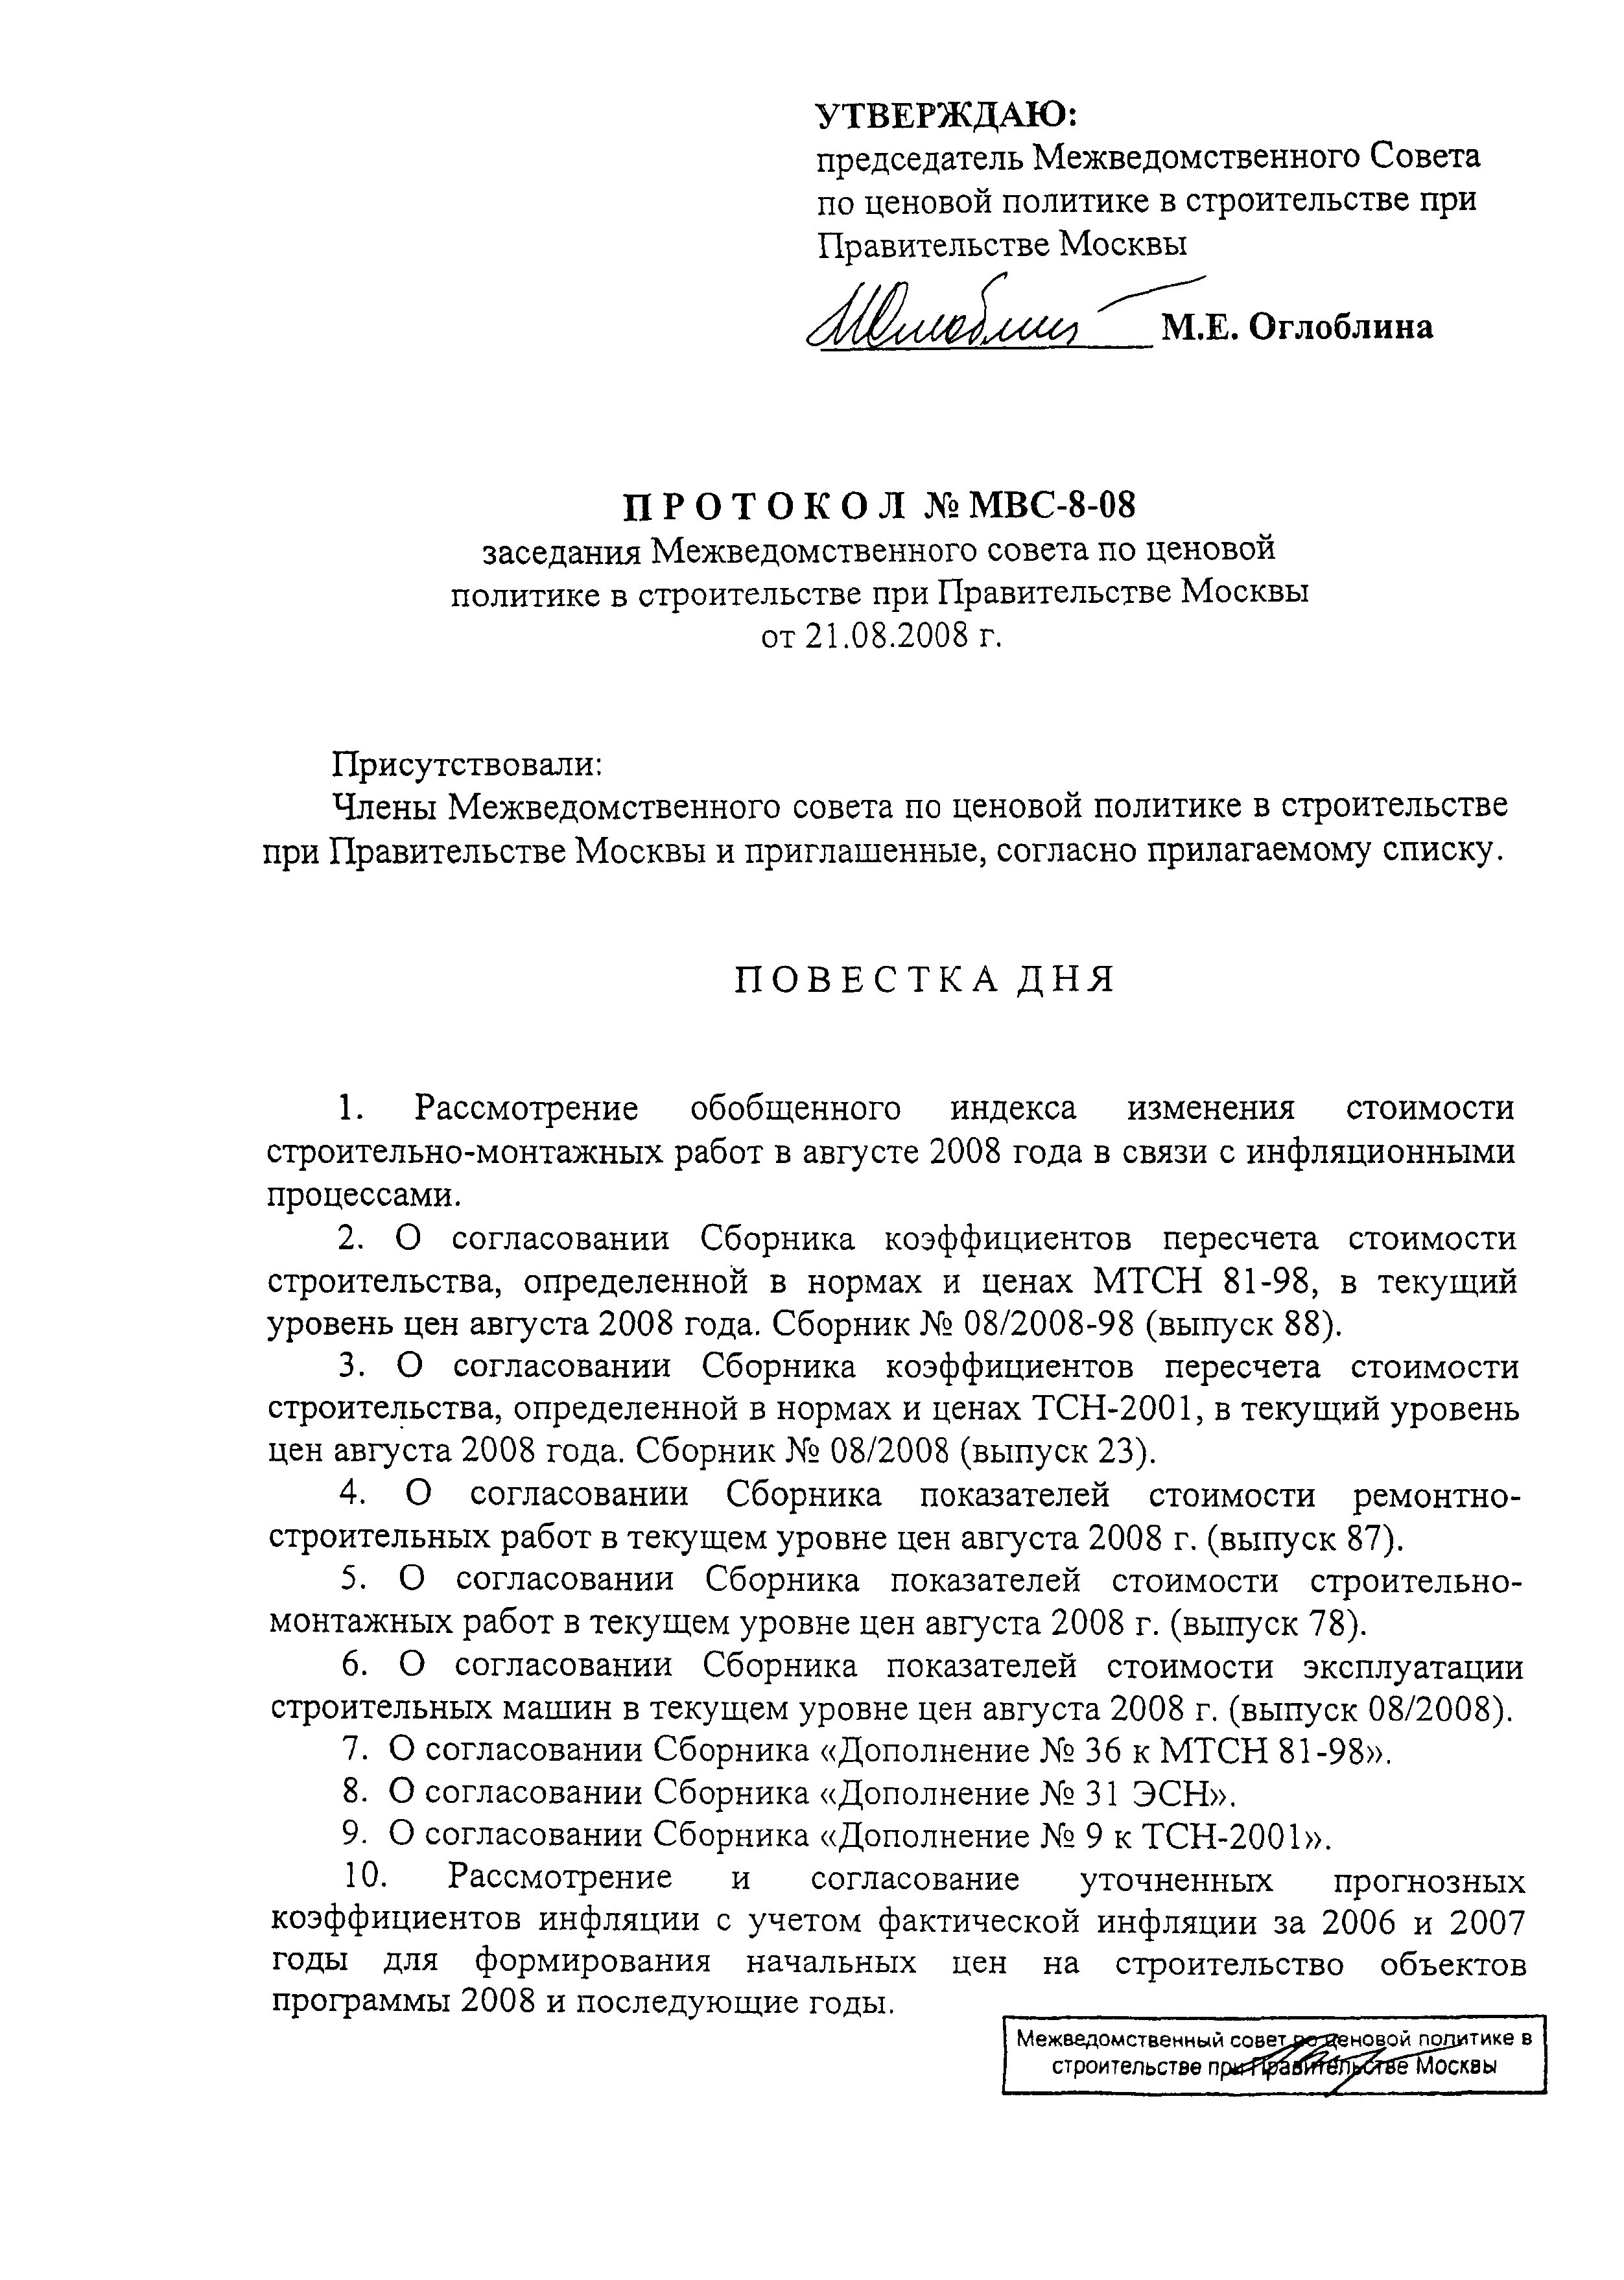 Протокол МВС-8-08